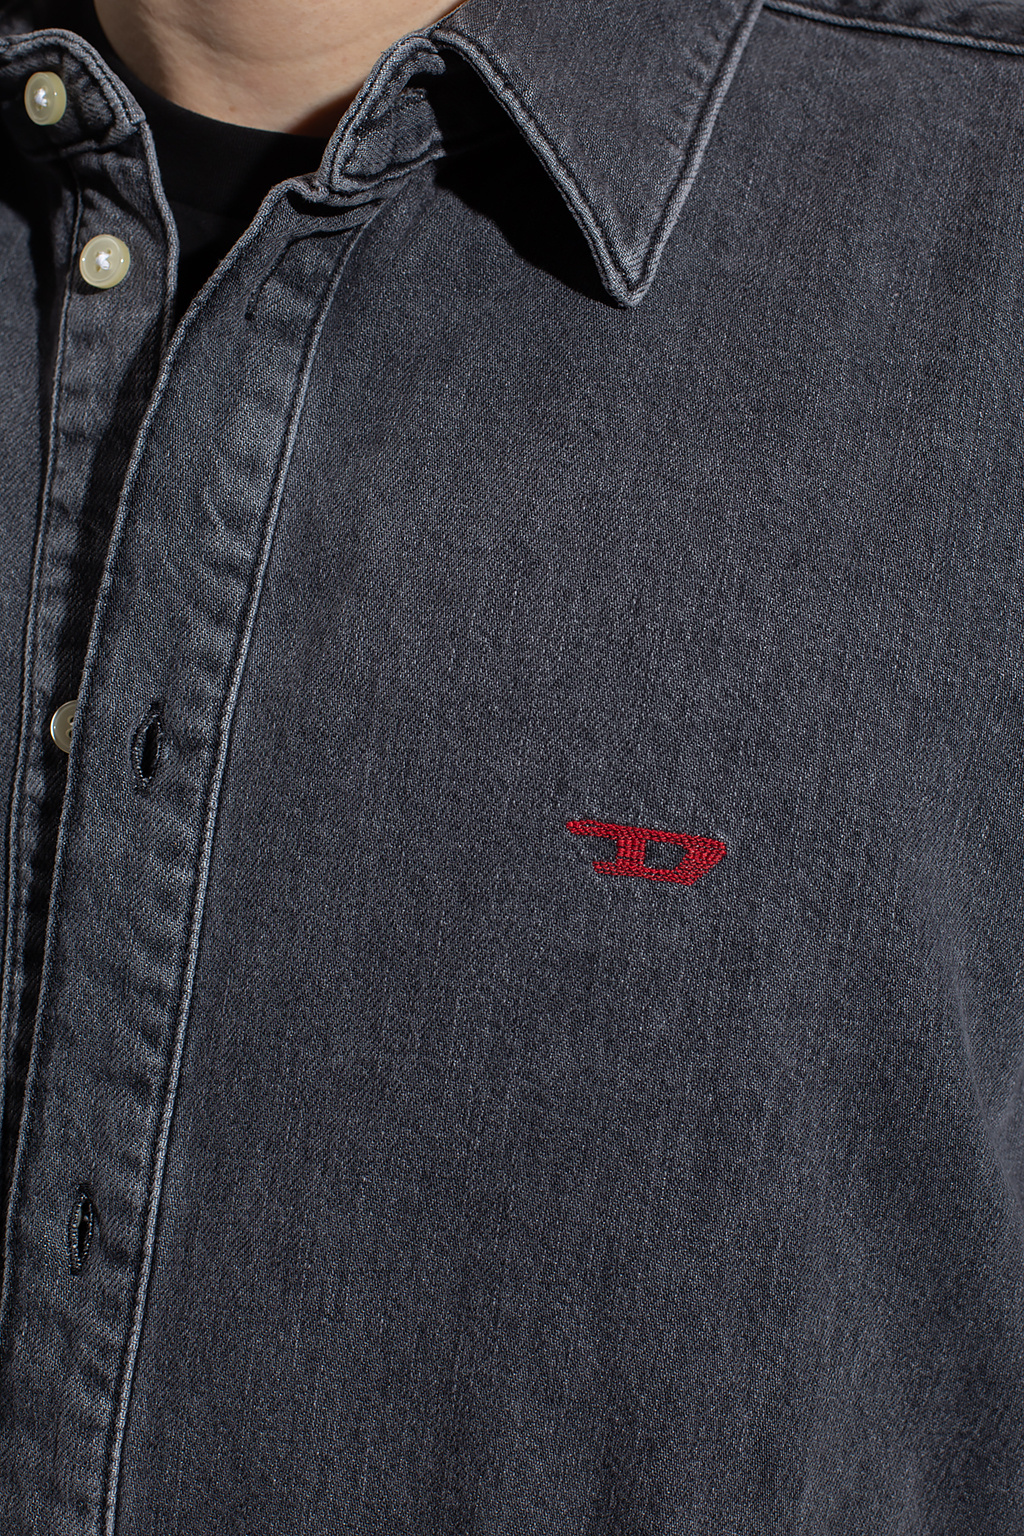 Diesel 'Icon logo zipped jacket